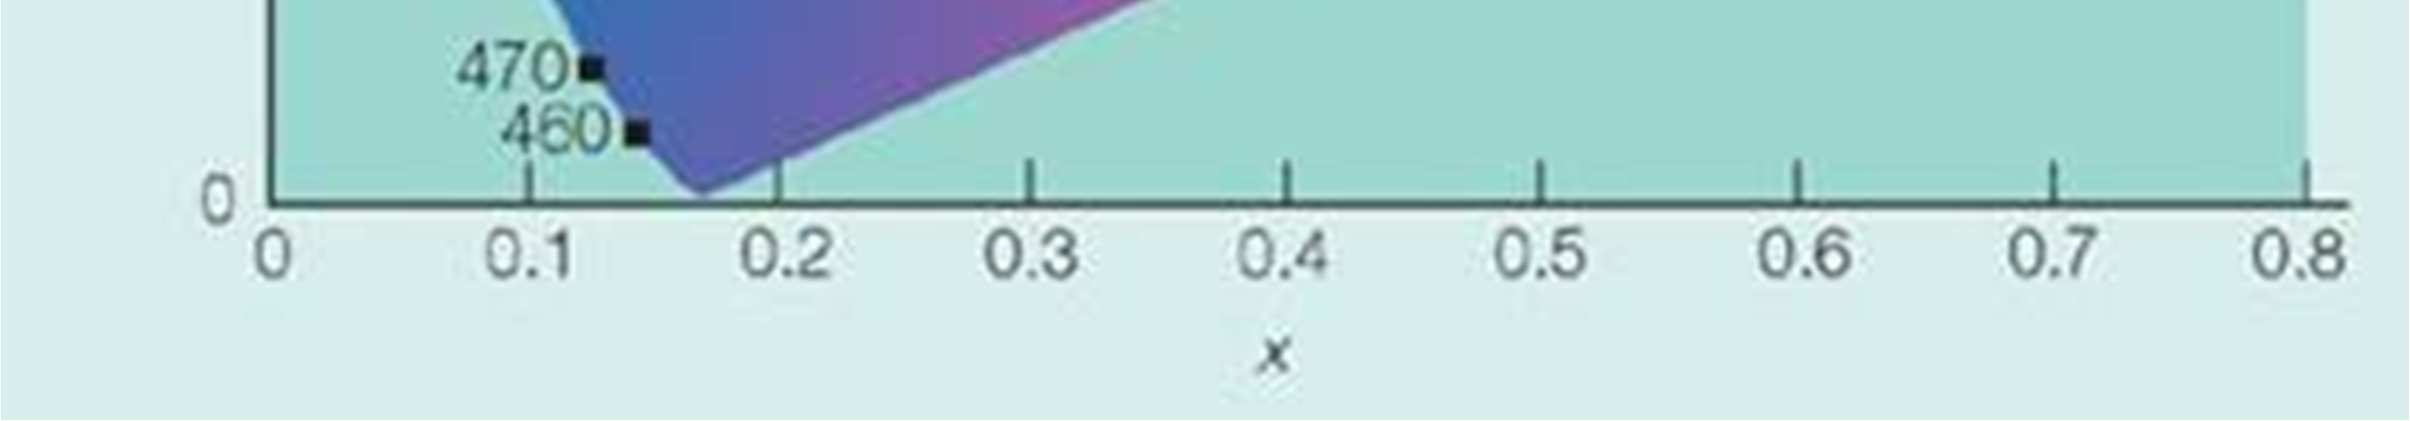 Technische Fiche Verlichting Colorimetrie 22 4. Afgeleide grootheden Figuur 14: (x,y) chromaticiteitsdiagram Uit Figuur 14 kunnen enkele afgeleide grootheden worden gedefinieerd.